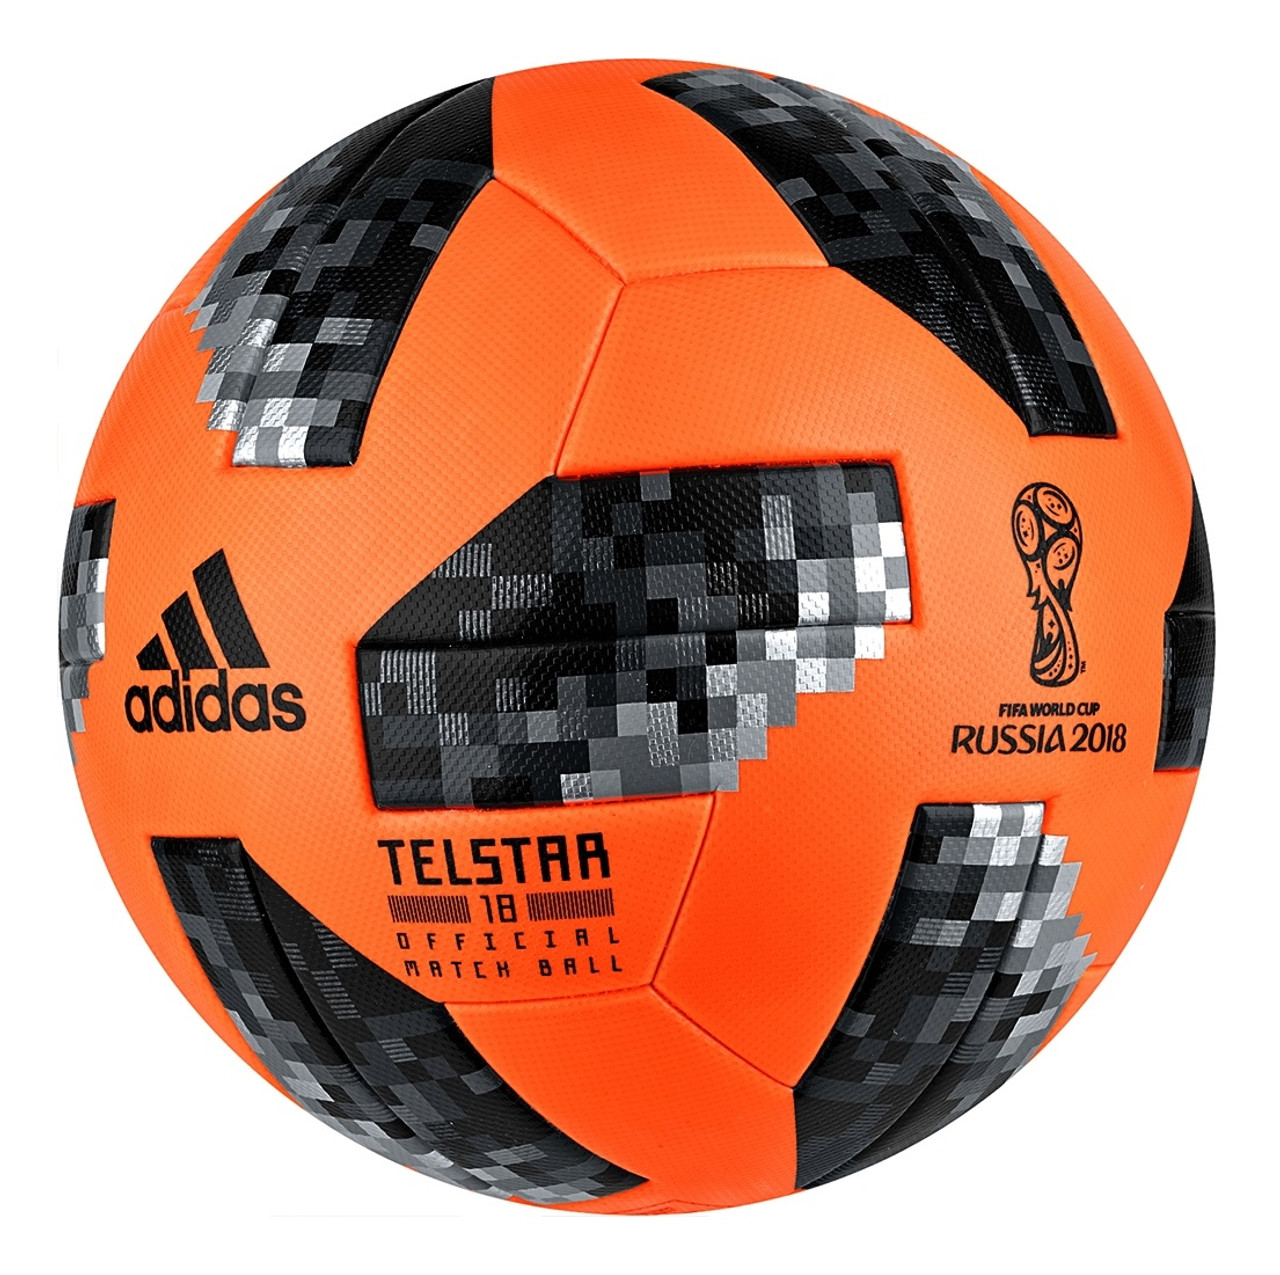 localizar soporte Enriquecimiento Adidas Telstar World Cup 2018 Official Winter Match Ball - Orange/Black  (111121) - ohp soccer